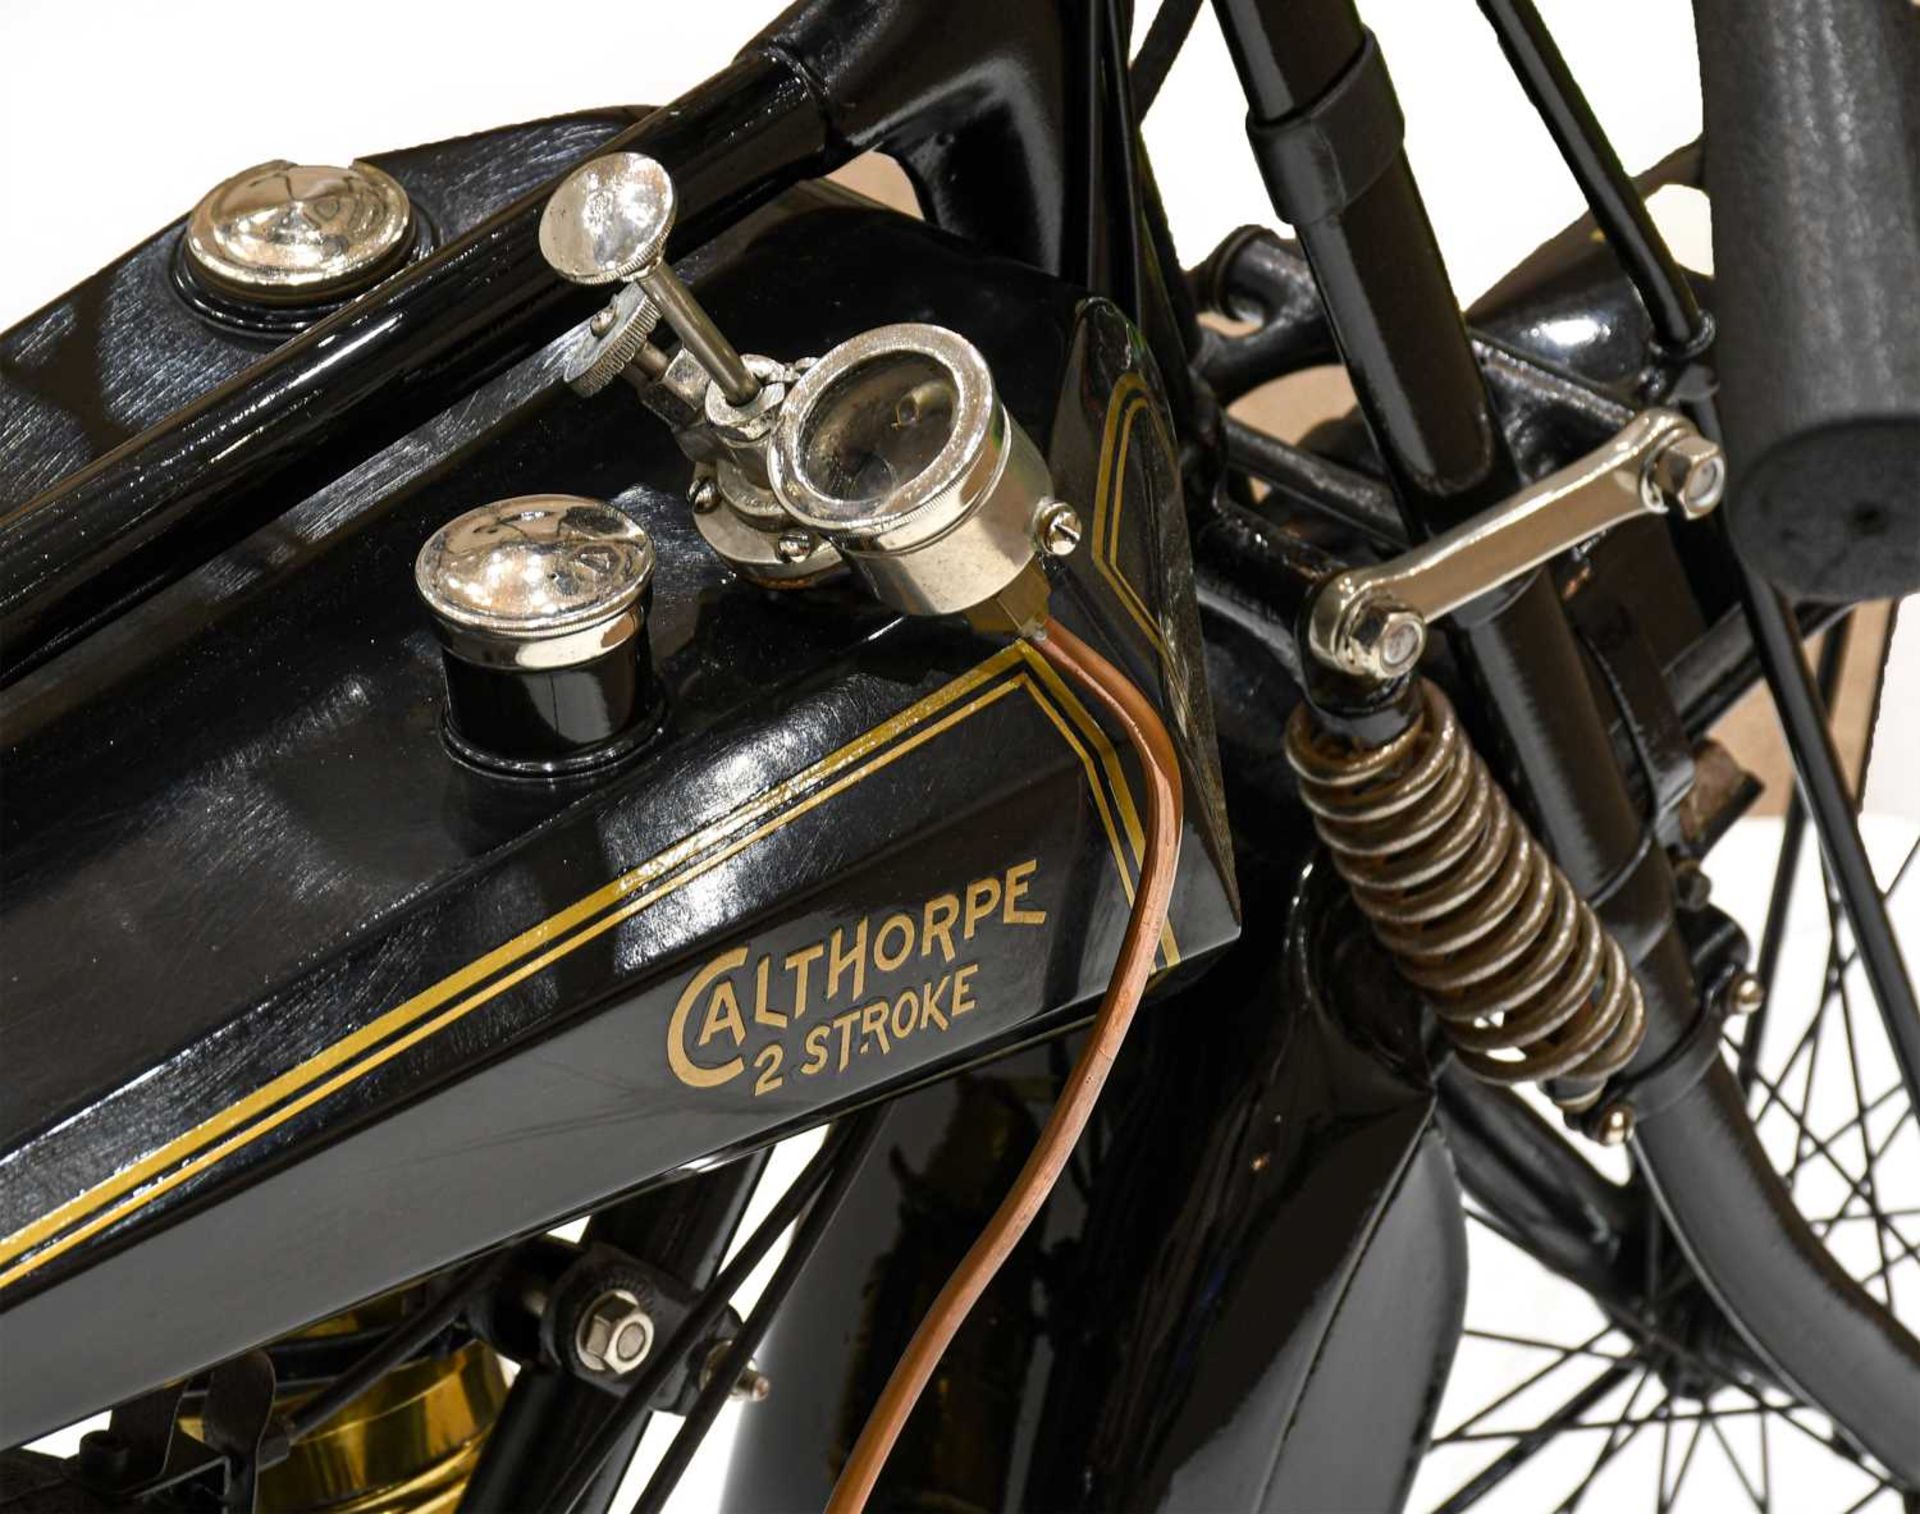 Calthorpe 2 Stroke 1923 250cc Registration number: AJ9 743 Last licensed in 1945 Restored late 80' - Image 5 of 5